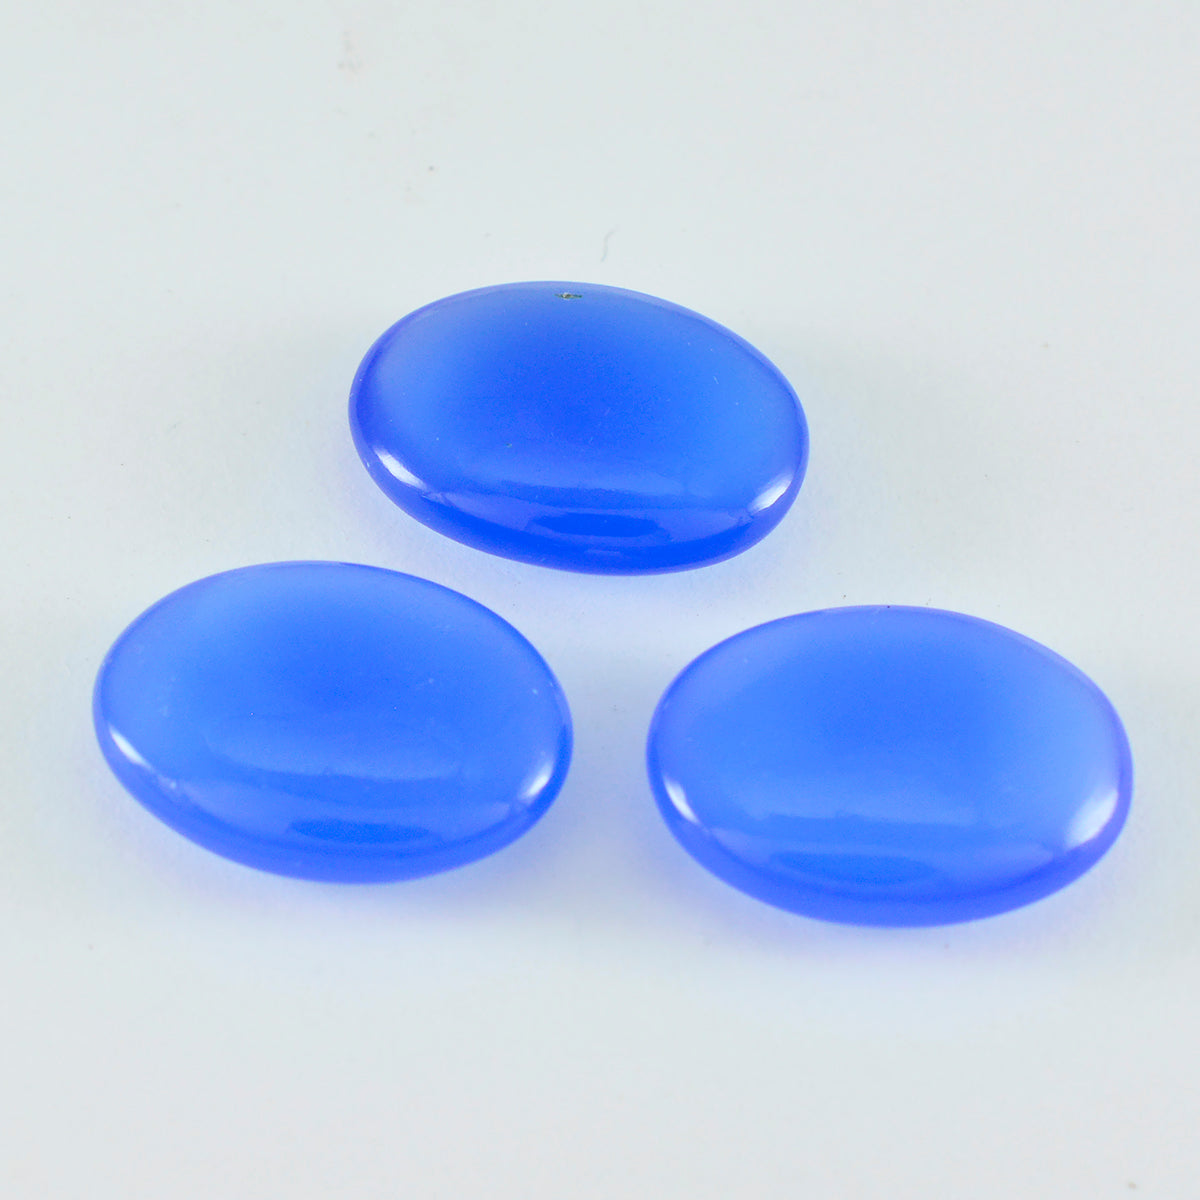 Riyogems 1PC blauwe chalcedoon cabochon 10x14 mm ovale vorm verbazingwekkende kwaliteit edelstenen